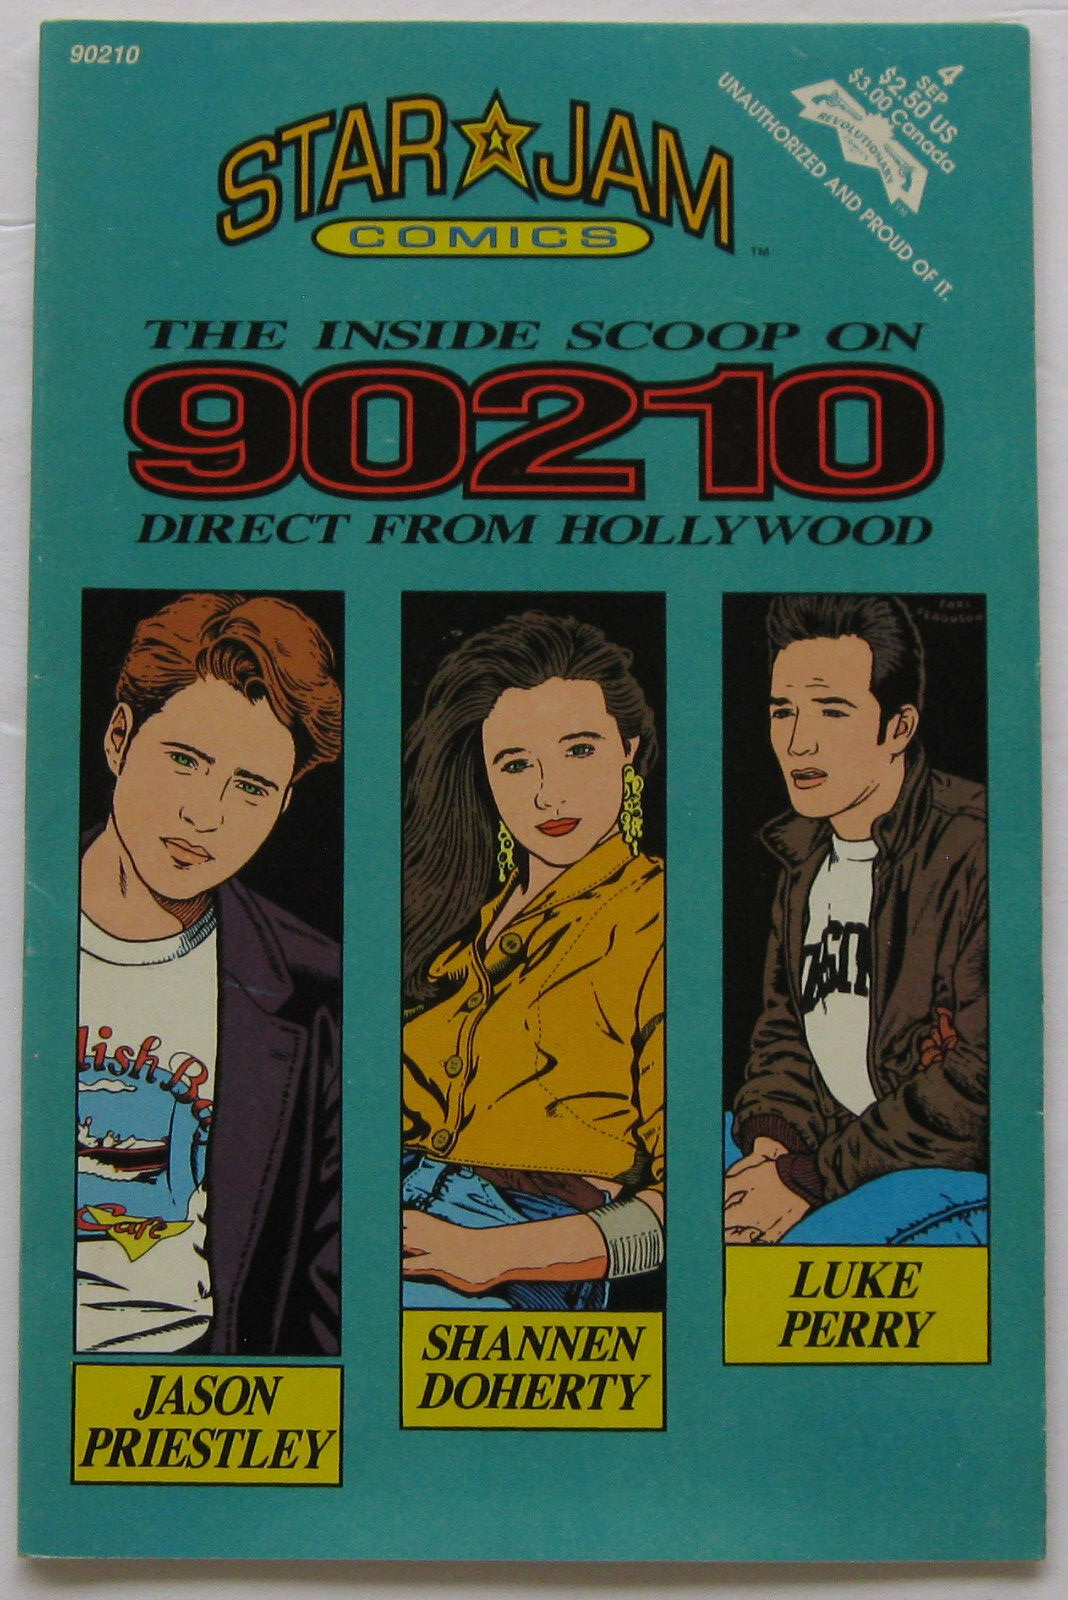 Star Jam Comics #4 (Sep 1992, Revolutionary), VFN (8.0), feature on 90210